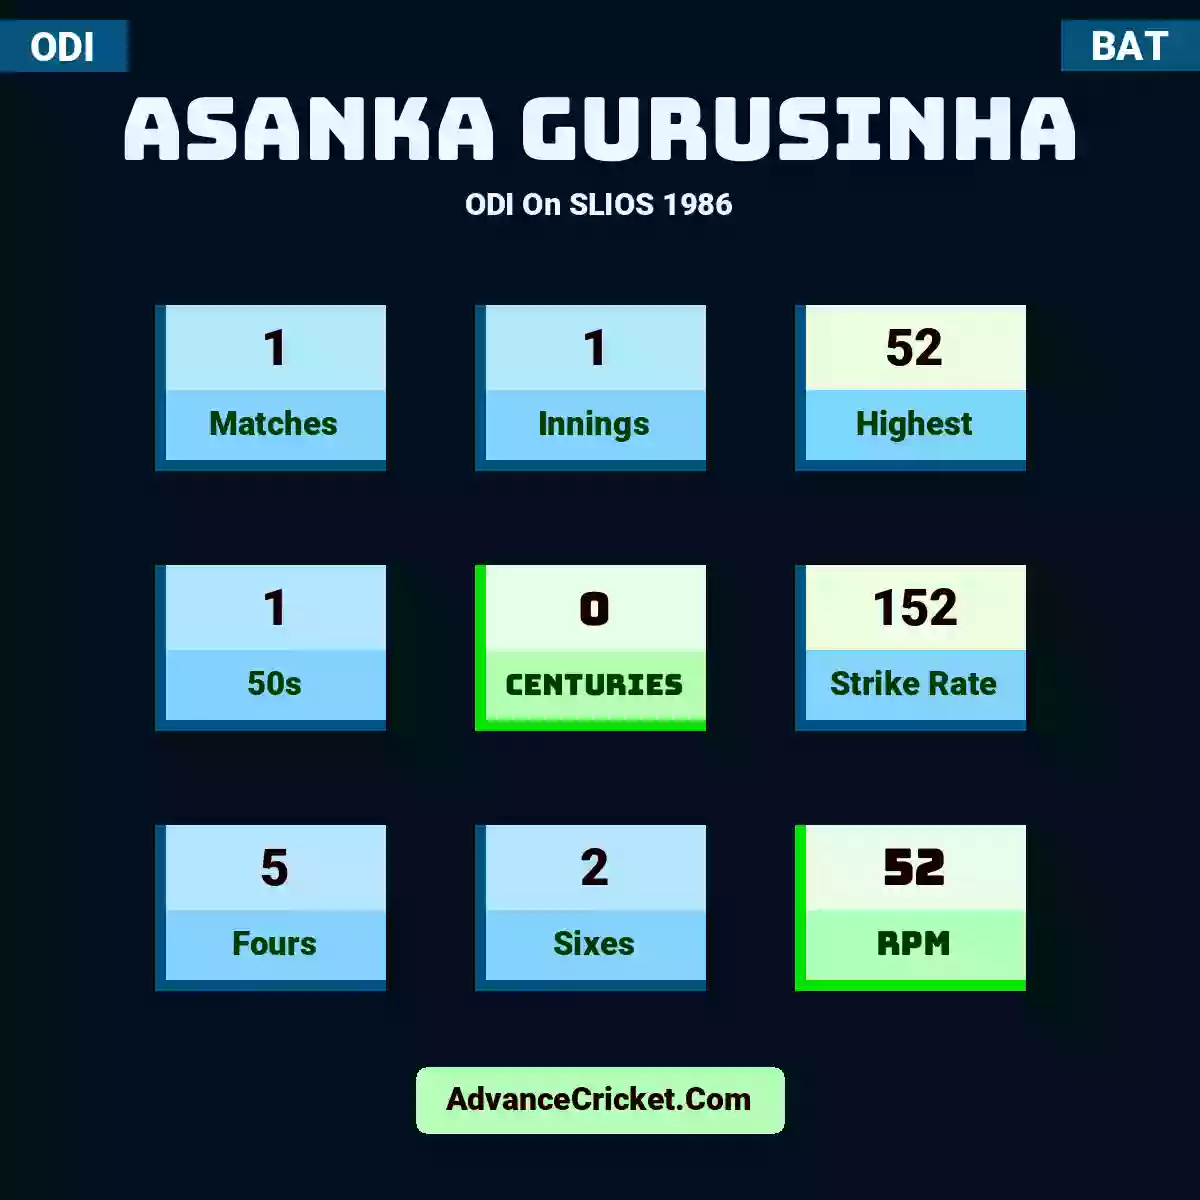 Asanka Gurusinha ODI  On SLIOS 1986, Asanka Gurusinha played 1 matches, scored 52 runs as highest, 1 half-centuries, and 0 centuries, with a strike rate of 152. A.Gurusinha hit 5 fours and 2 sixes, with an RPM of 52.